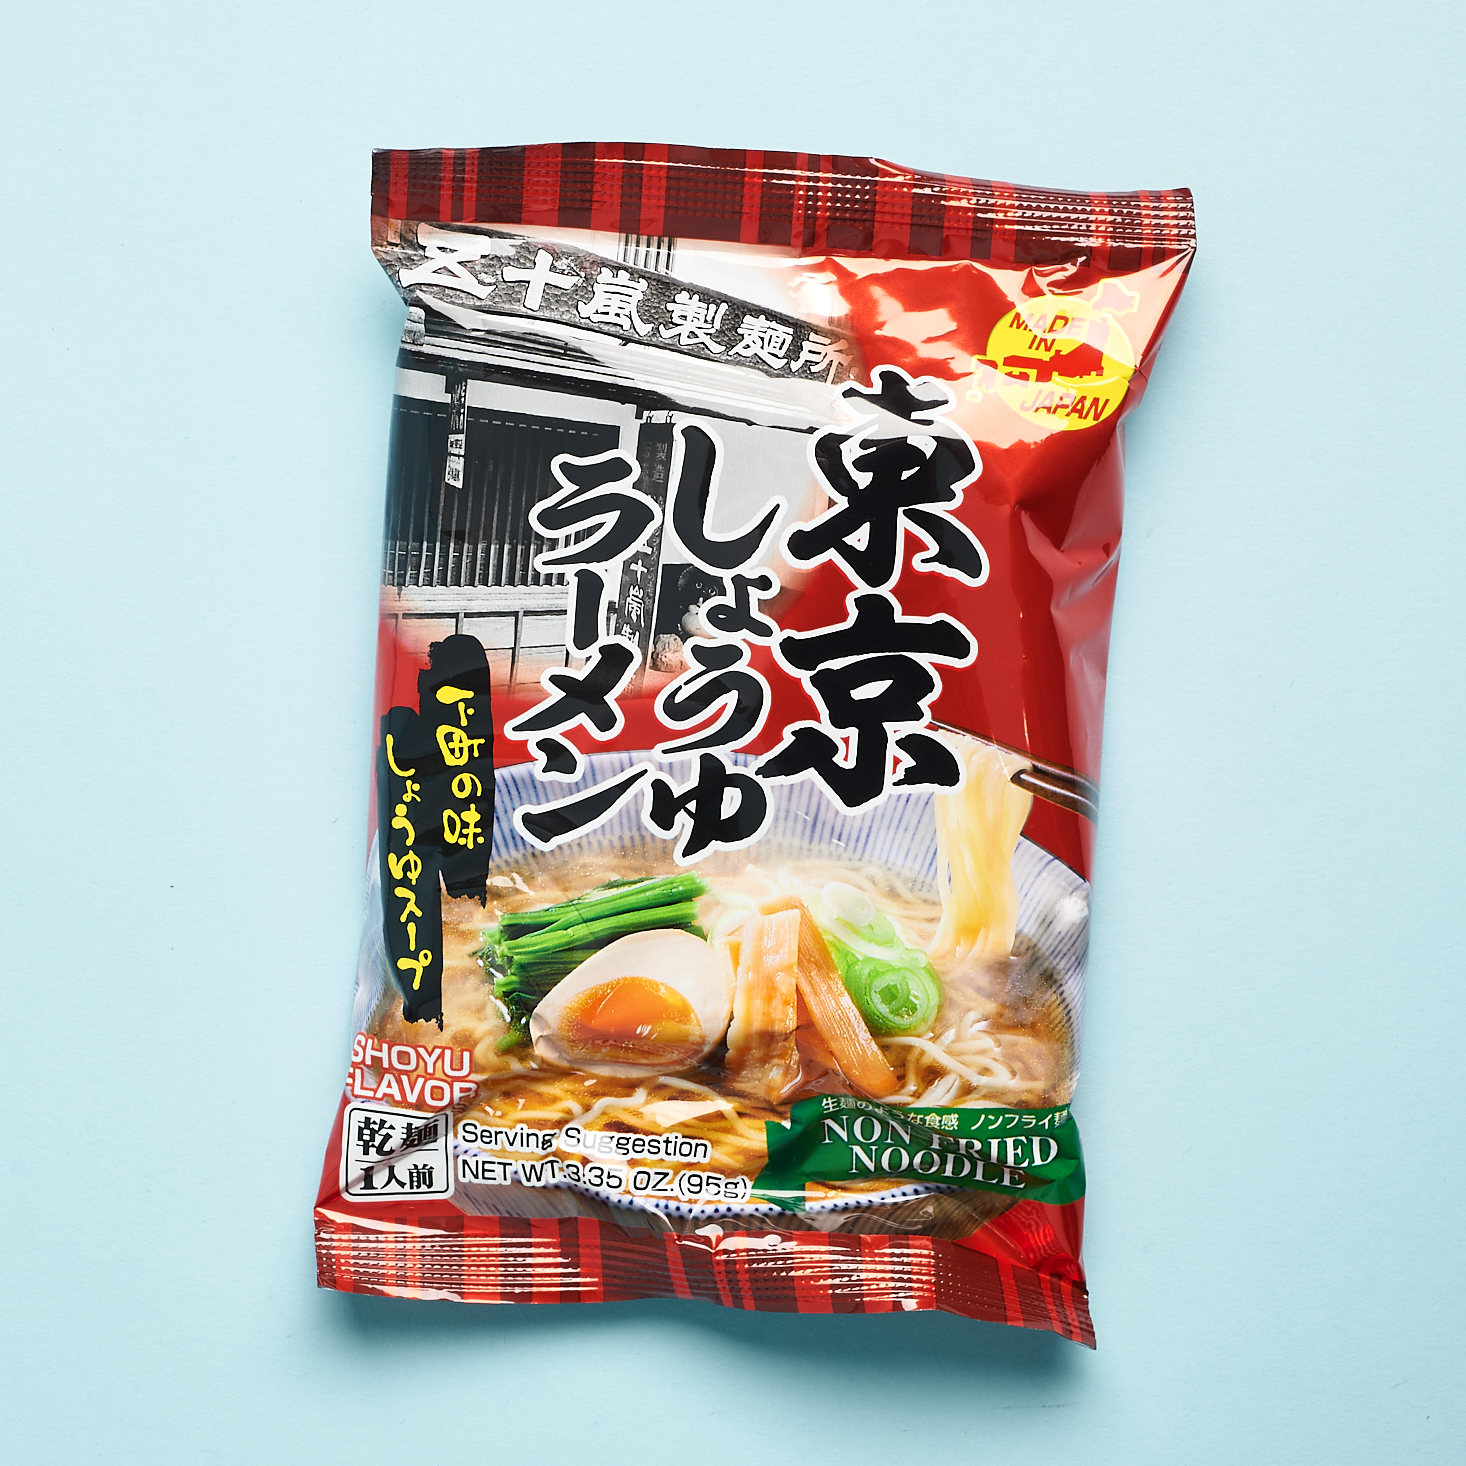 tokyo soy sauce ramen front